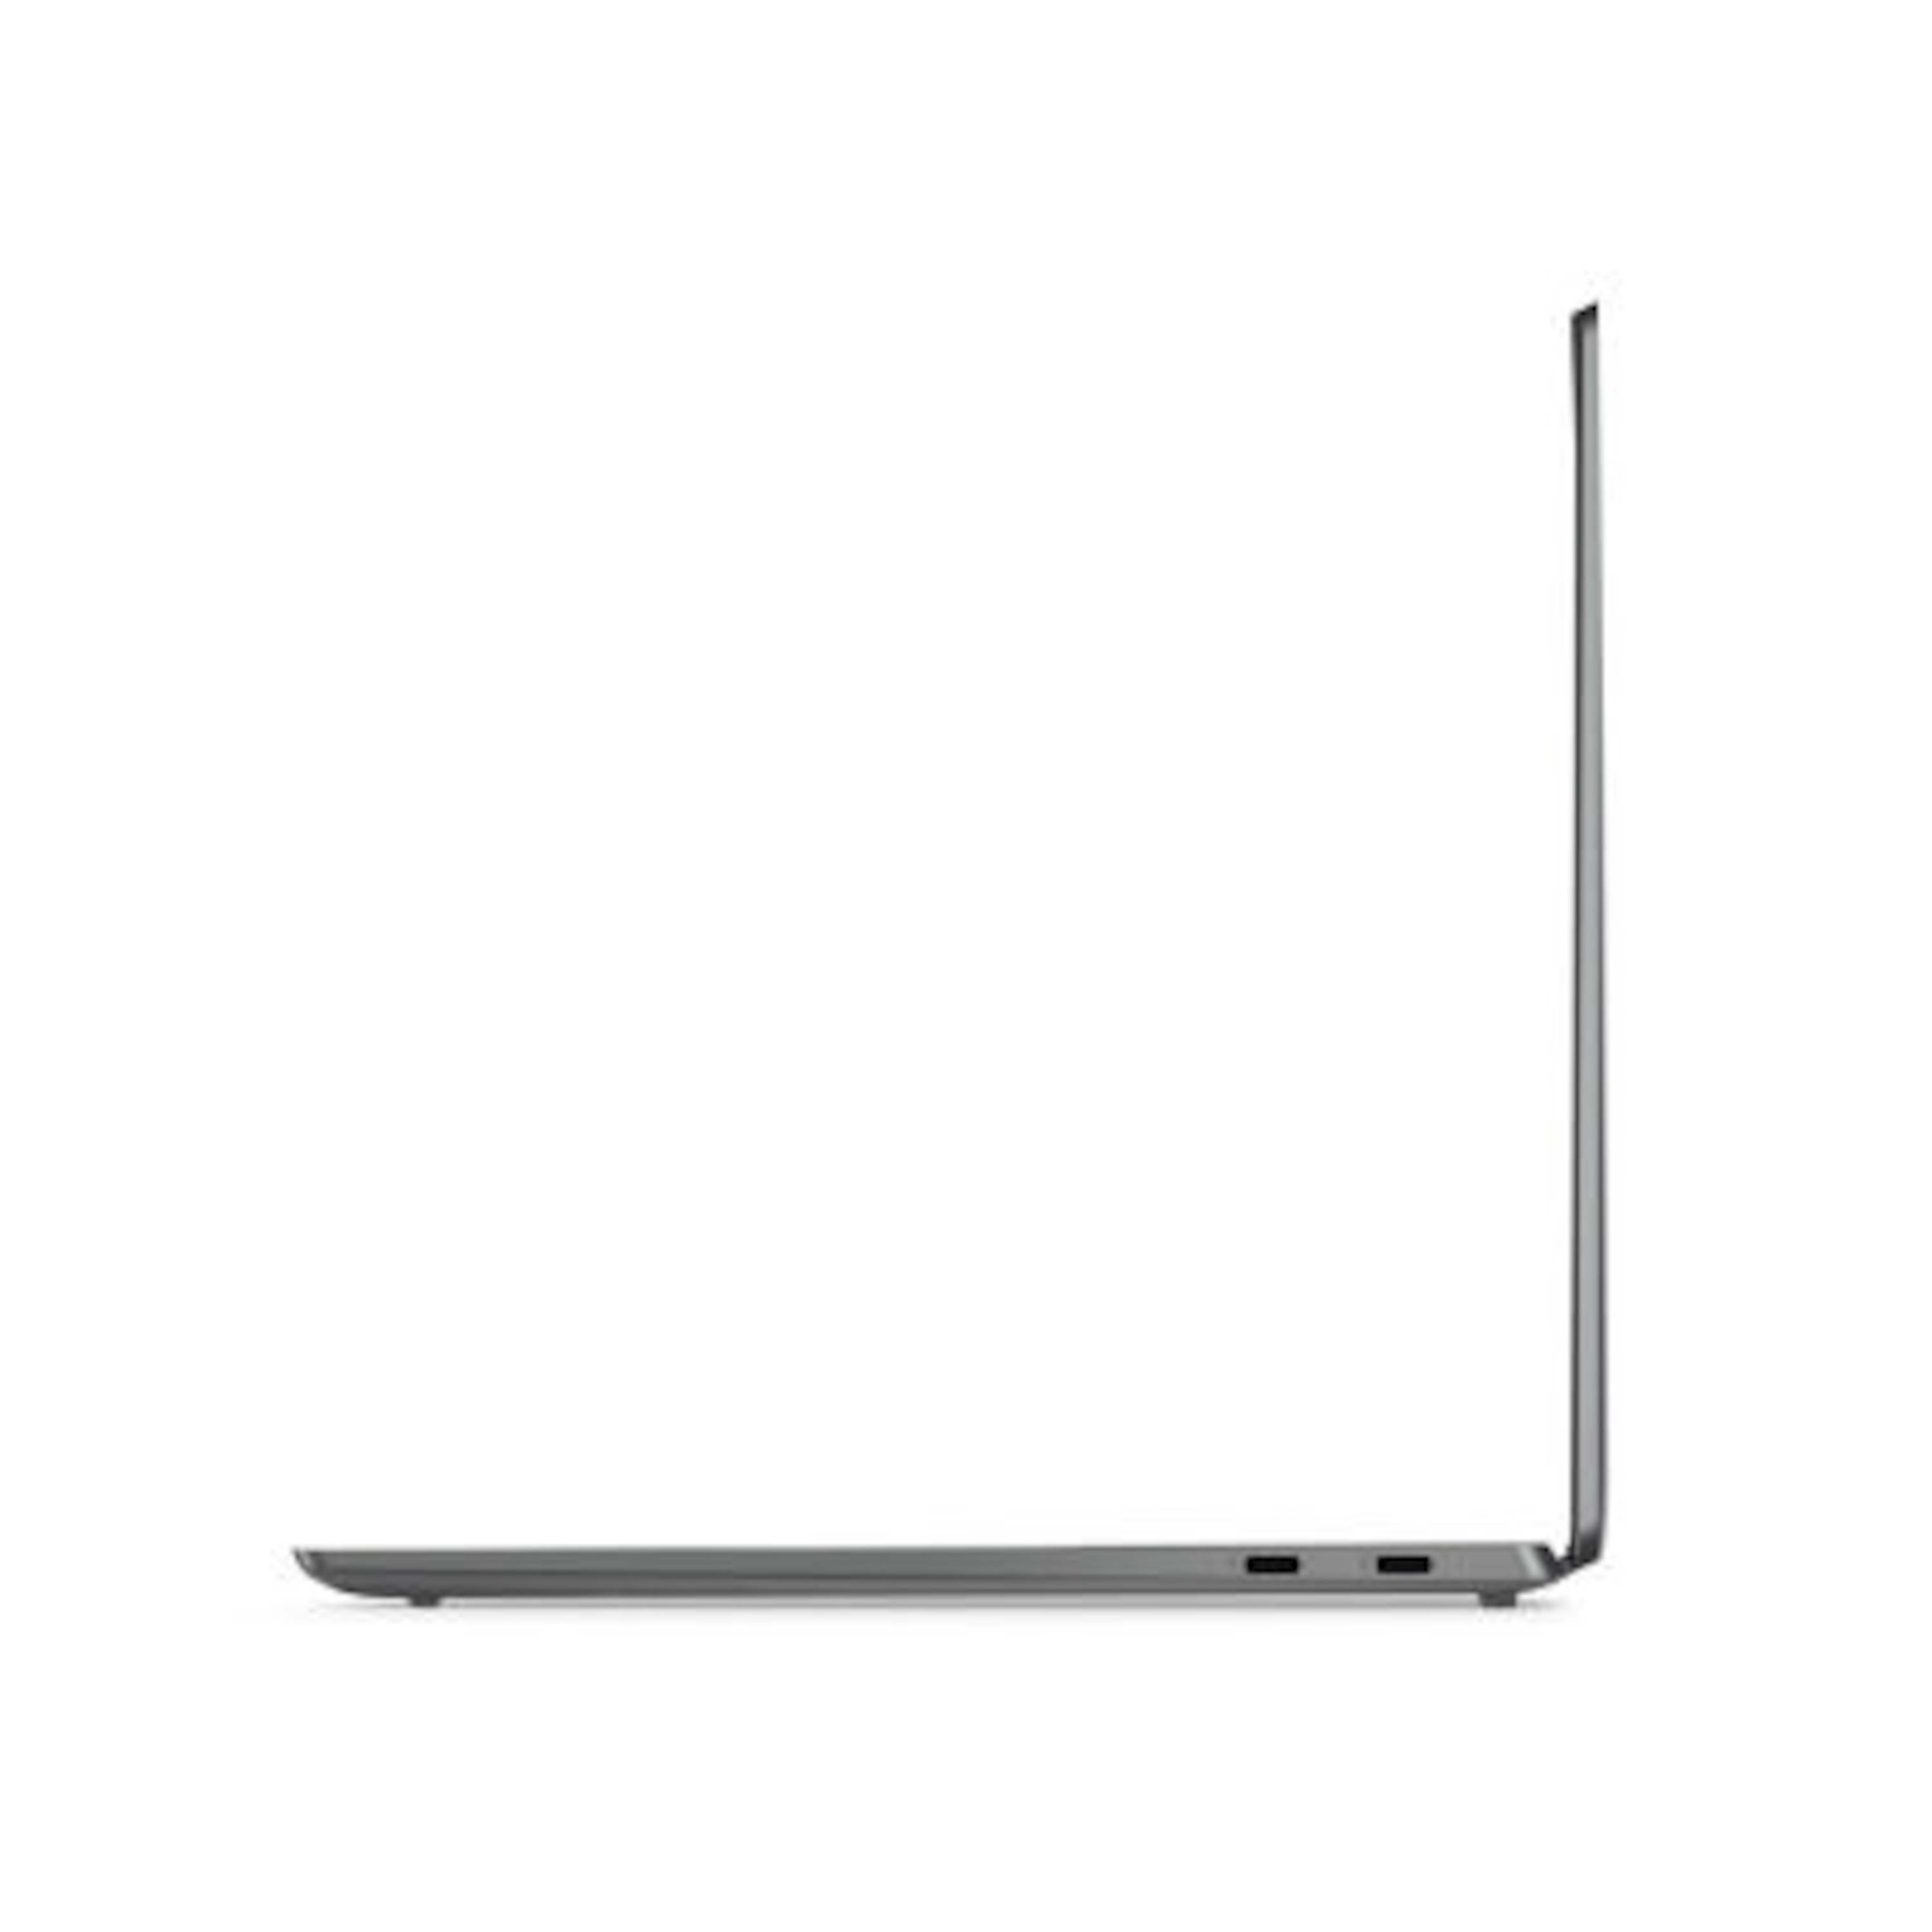 LENOVO Yoga™ S940-14IIL05, Intel® Core™ i7-1065G7, Windows 10 Home, 35,5 cm (14") FHD Touch-Display, 1 TB PCIe SSD, 16 GB RAM, Convertible